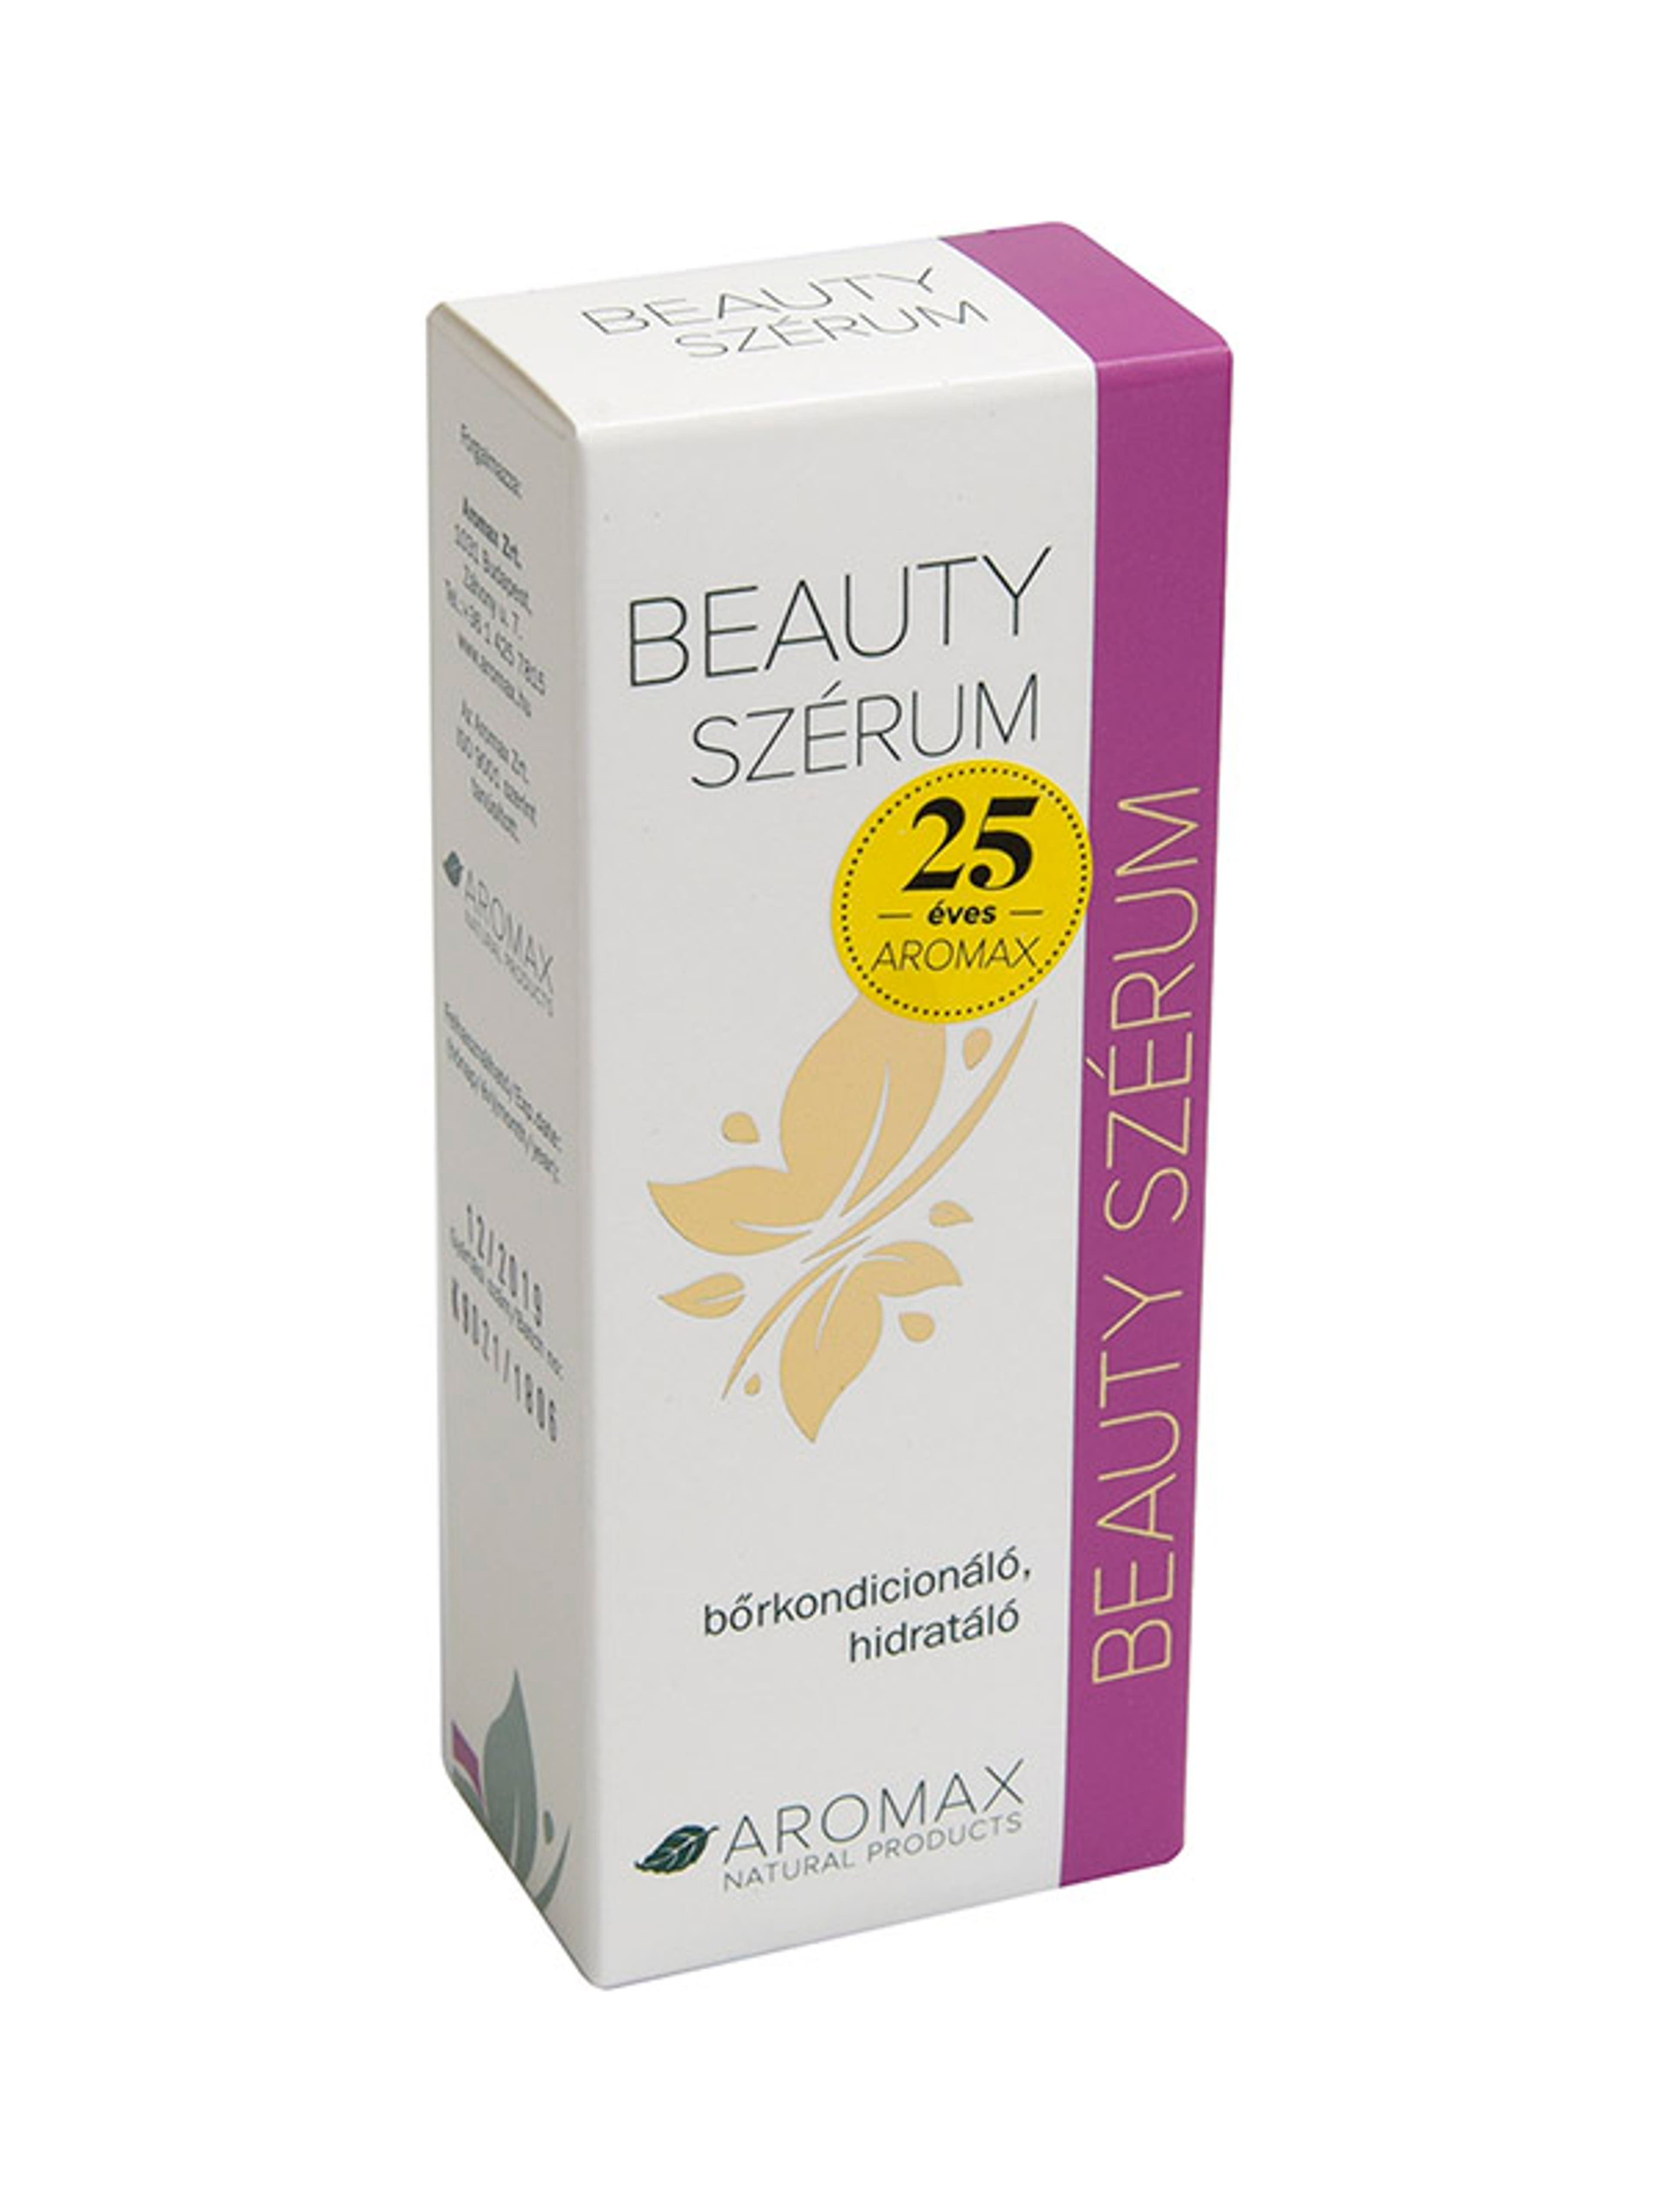 Aromax beauty szérum - 20 ml-1